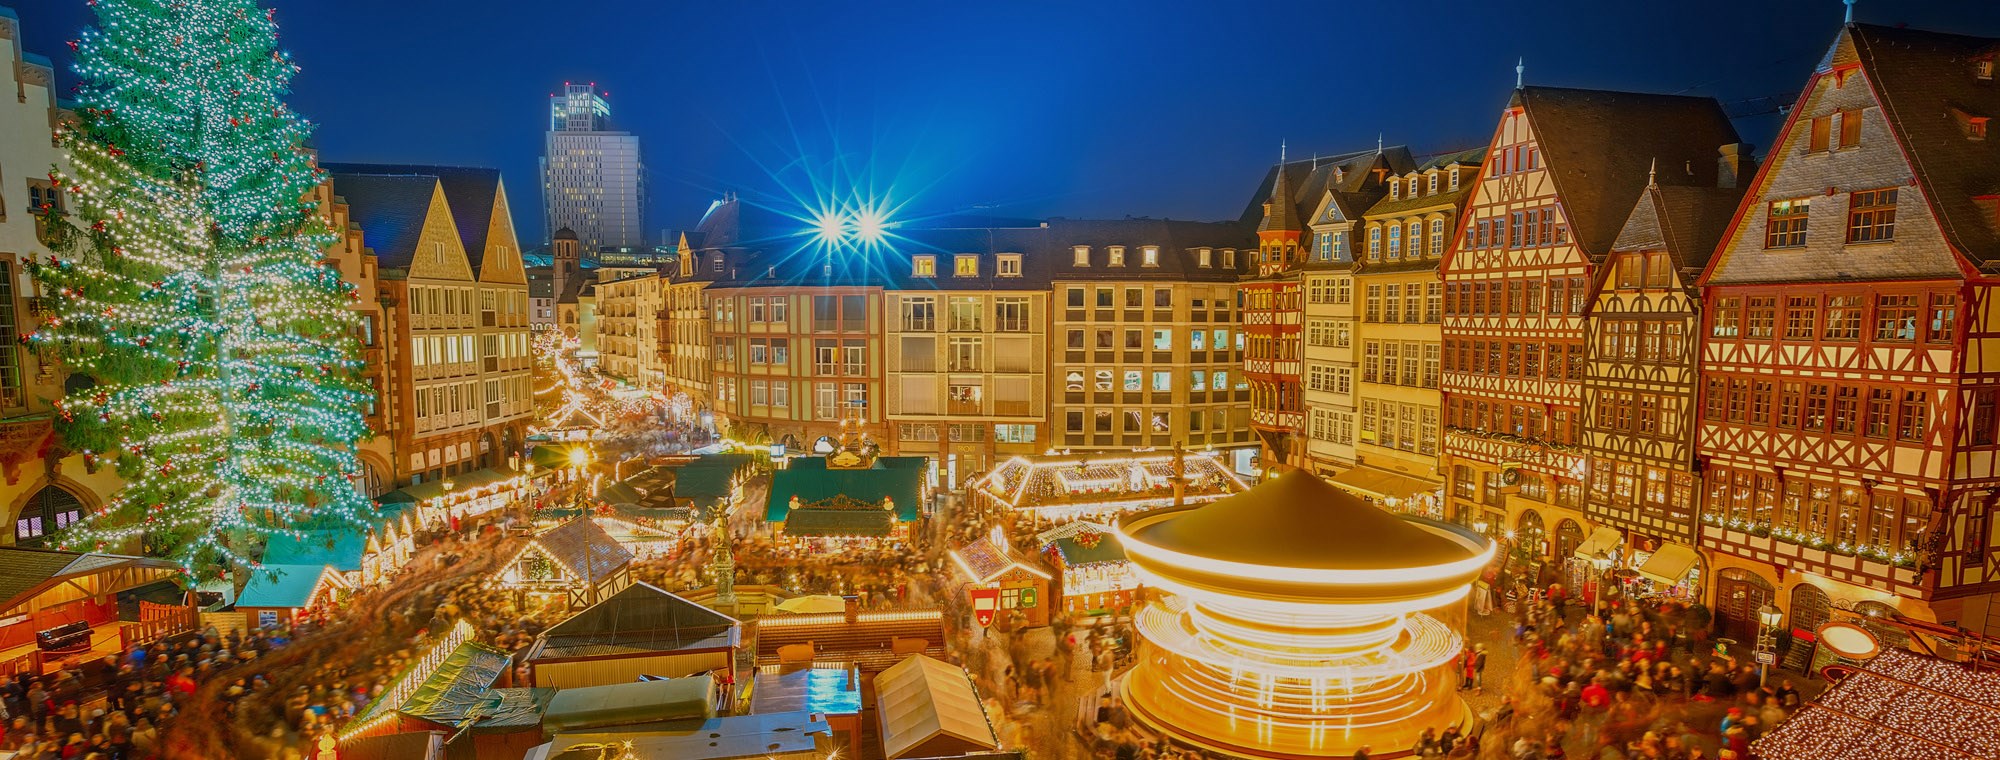 Germany Frankfurt Christmas Market At Night Tinted